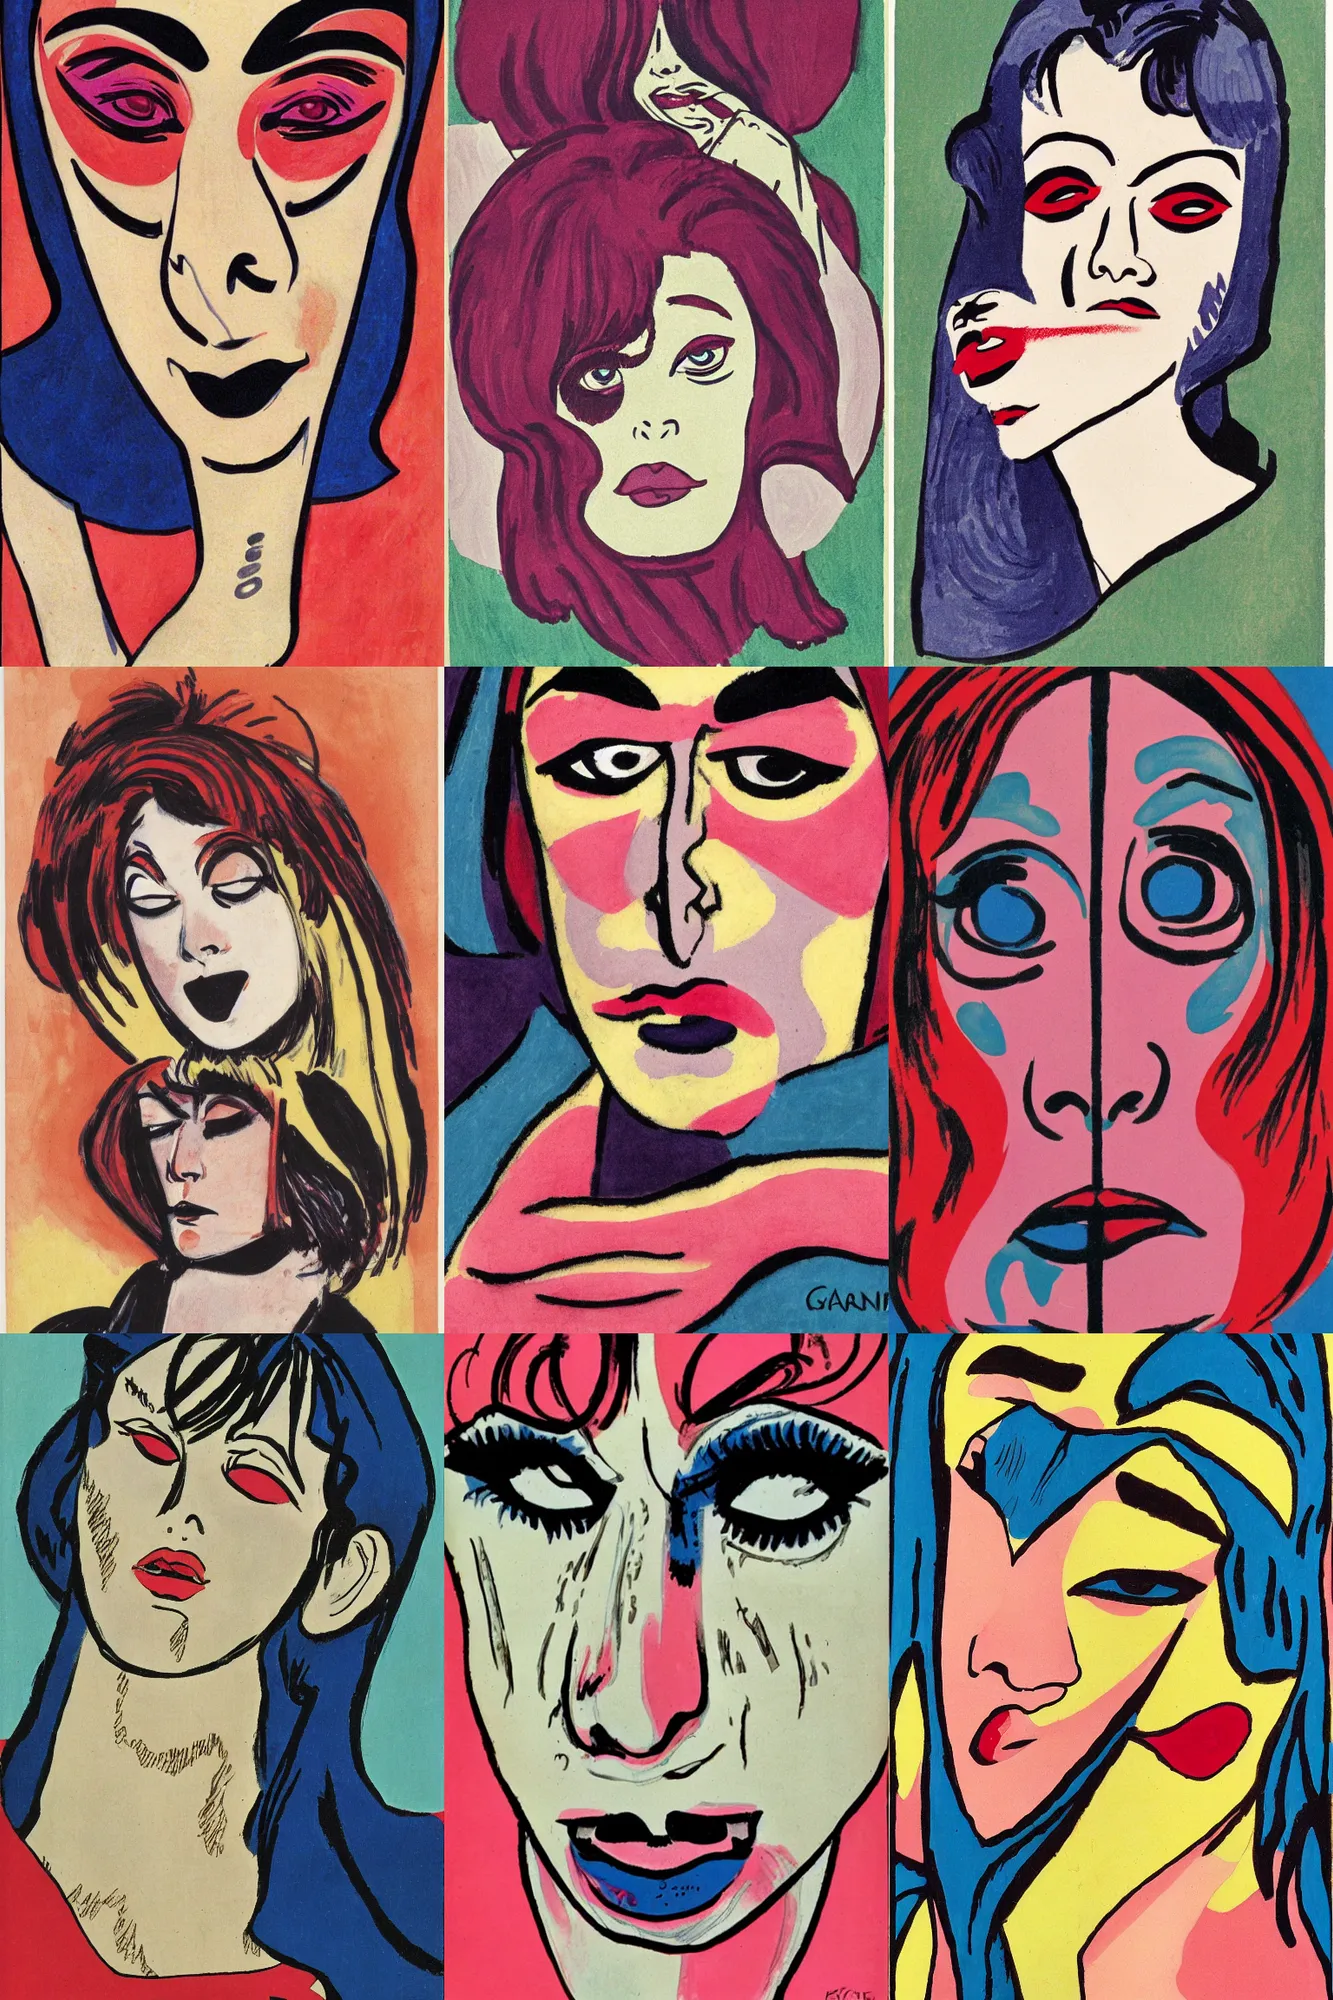 Prompt: tragic face, color mascara's running tears art by Kirchner, Gaughan, Caulfield, Aoshima, Earle